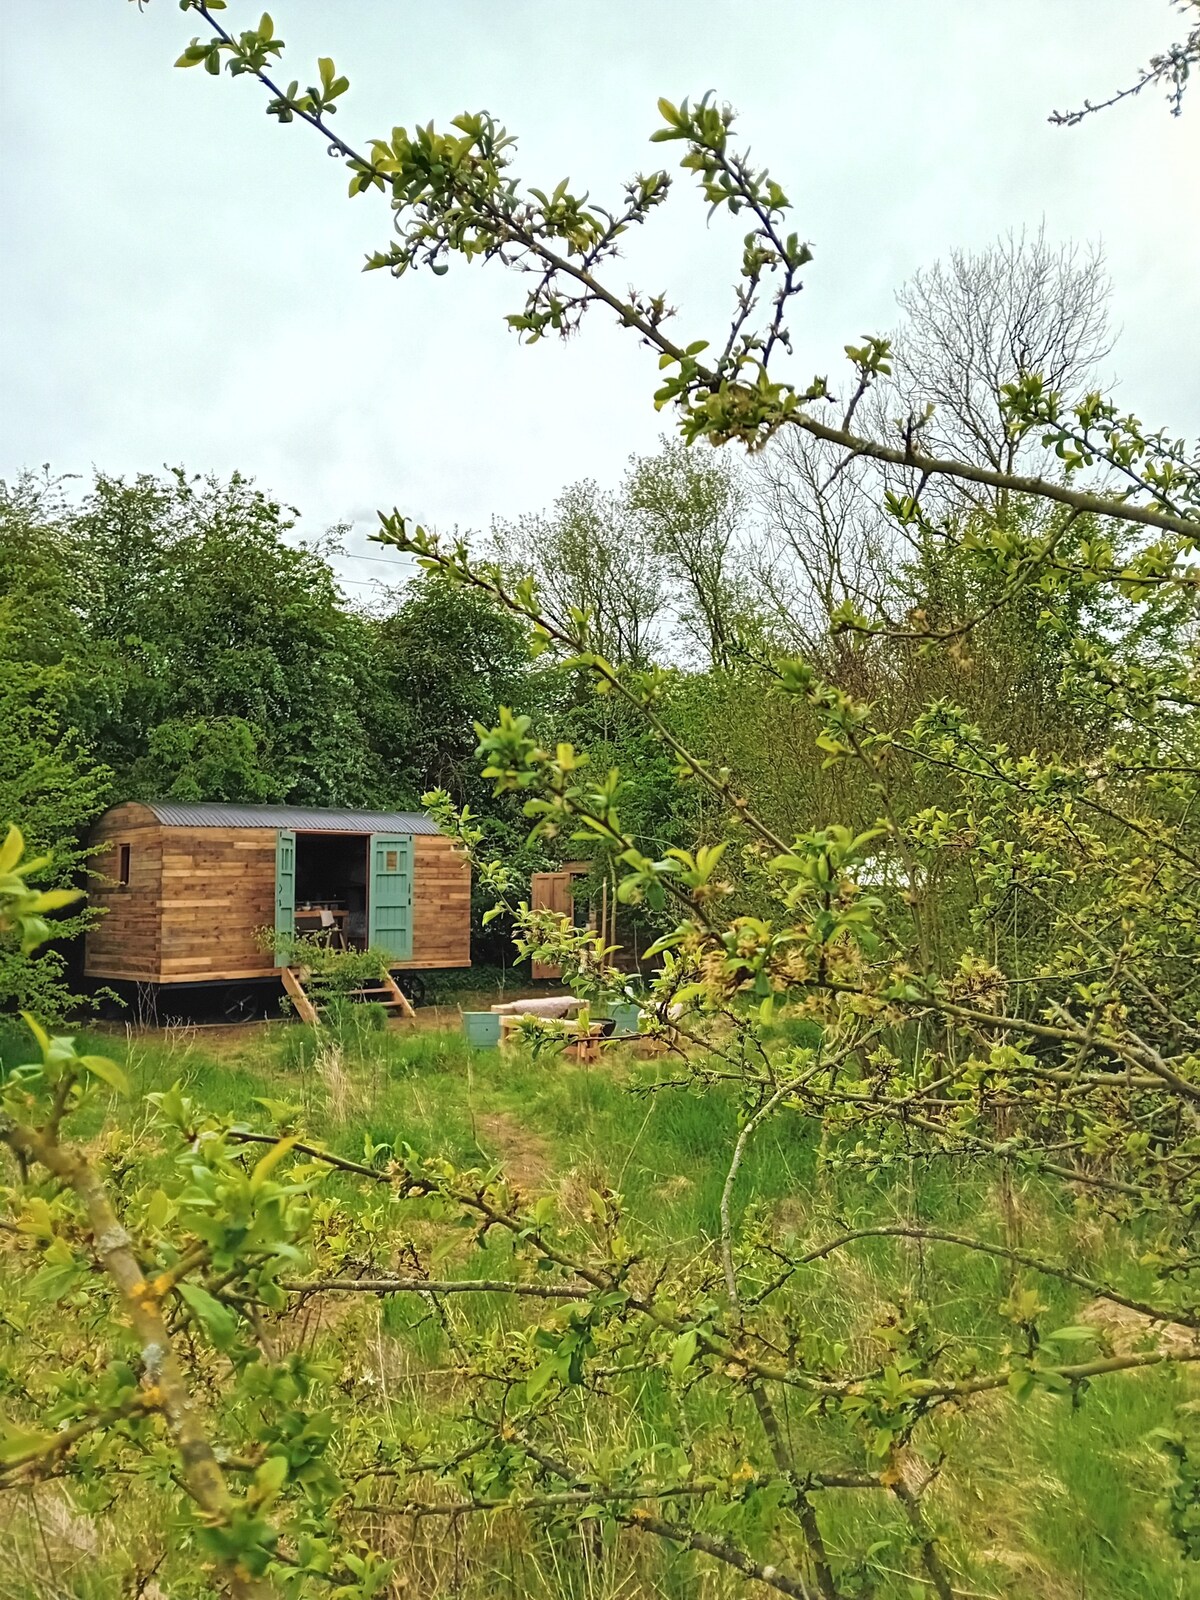 Stunning shepherd's hut set in a private field.